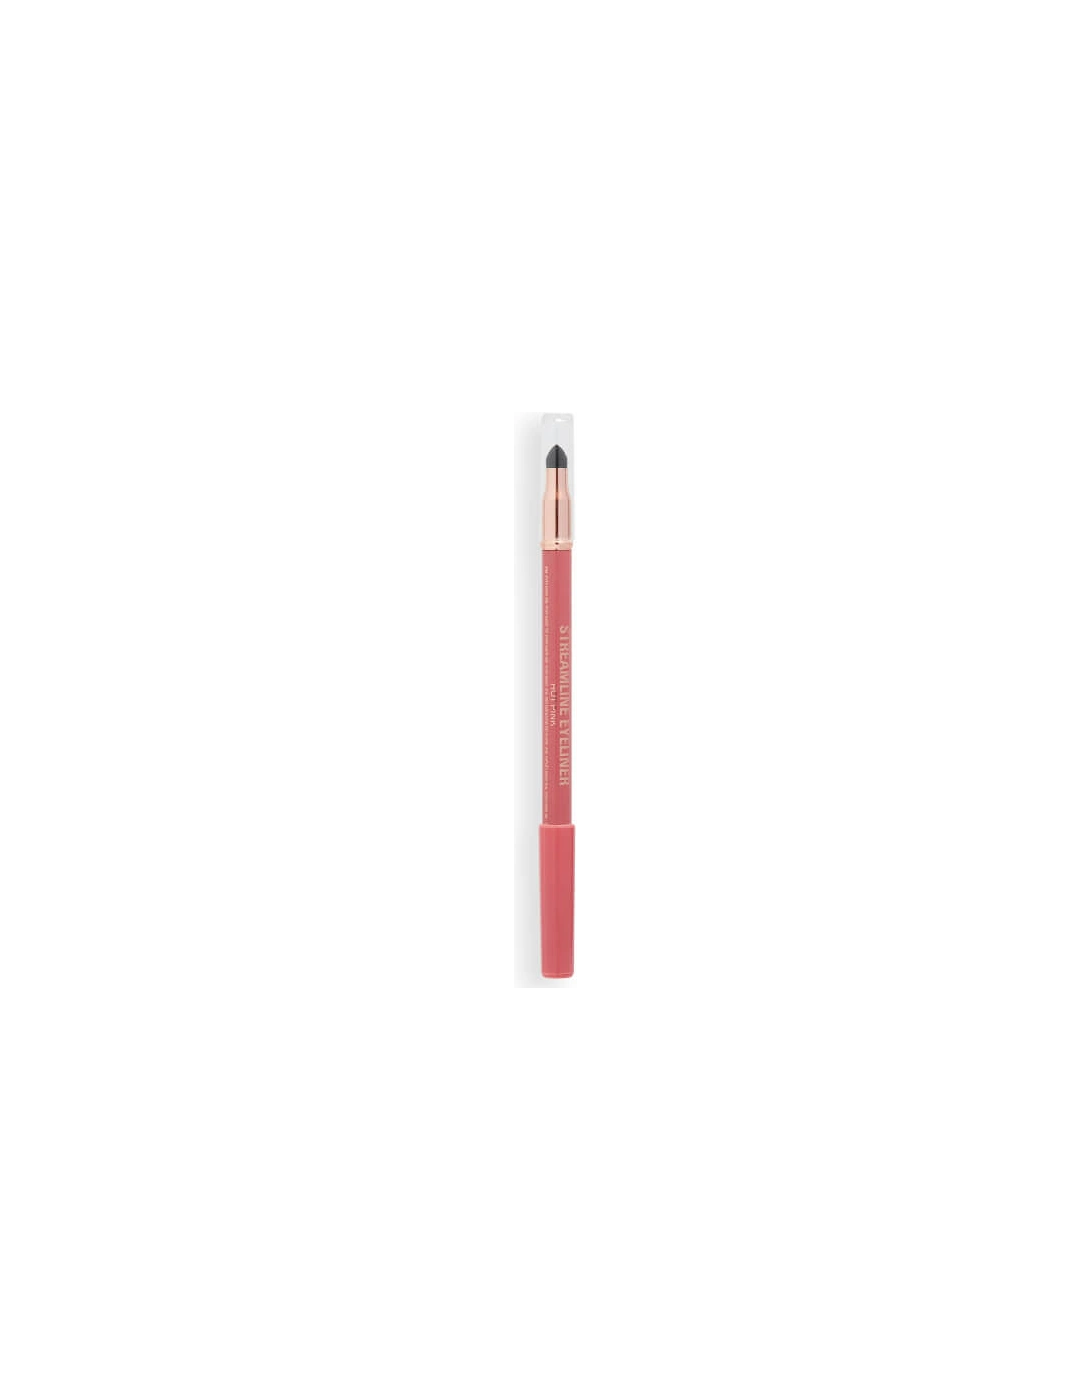 Makeup Streamline Waterline Eyeliner Pencil - Hot Pink, 2 of 1